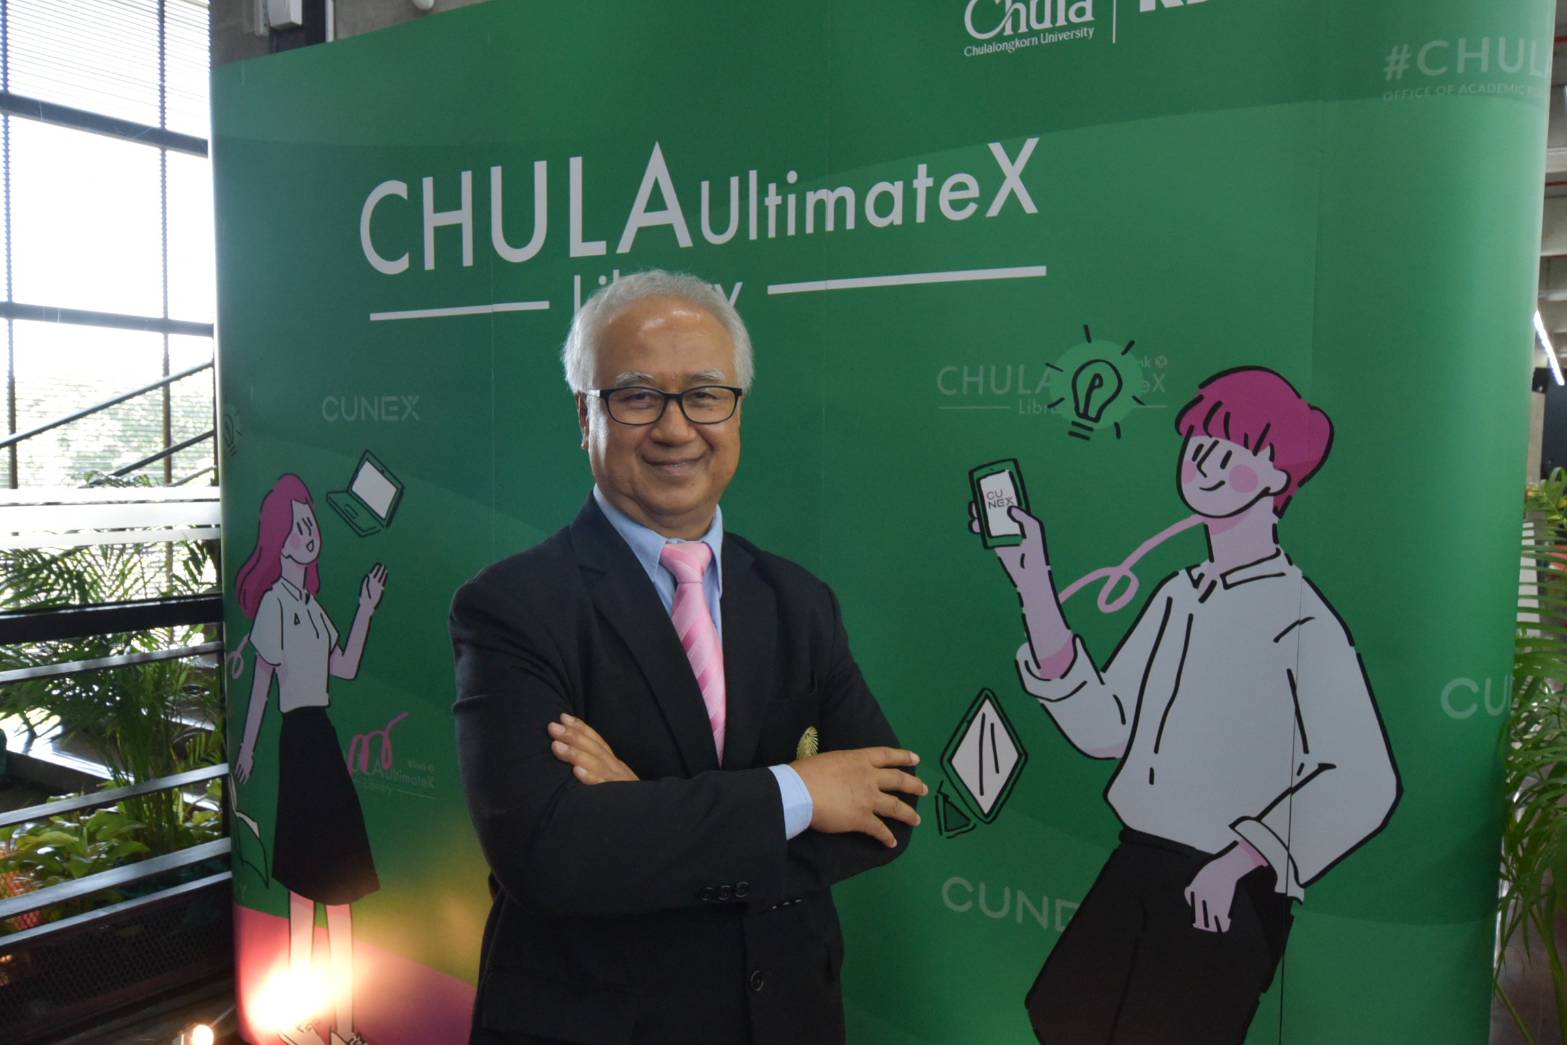 Chula UltimateX Library ต้นแบบห้องสมุด Unmanned Library แห่งแรกของประเทศไทยที่จุฬาฯ